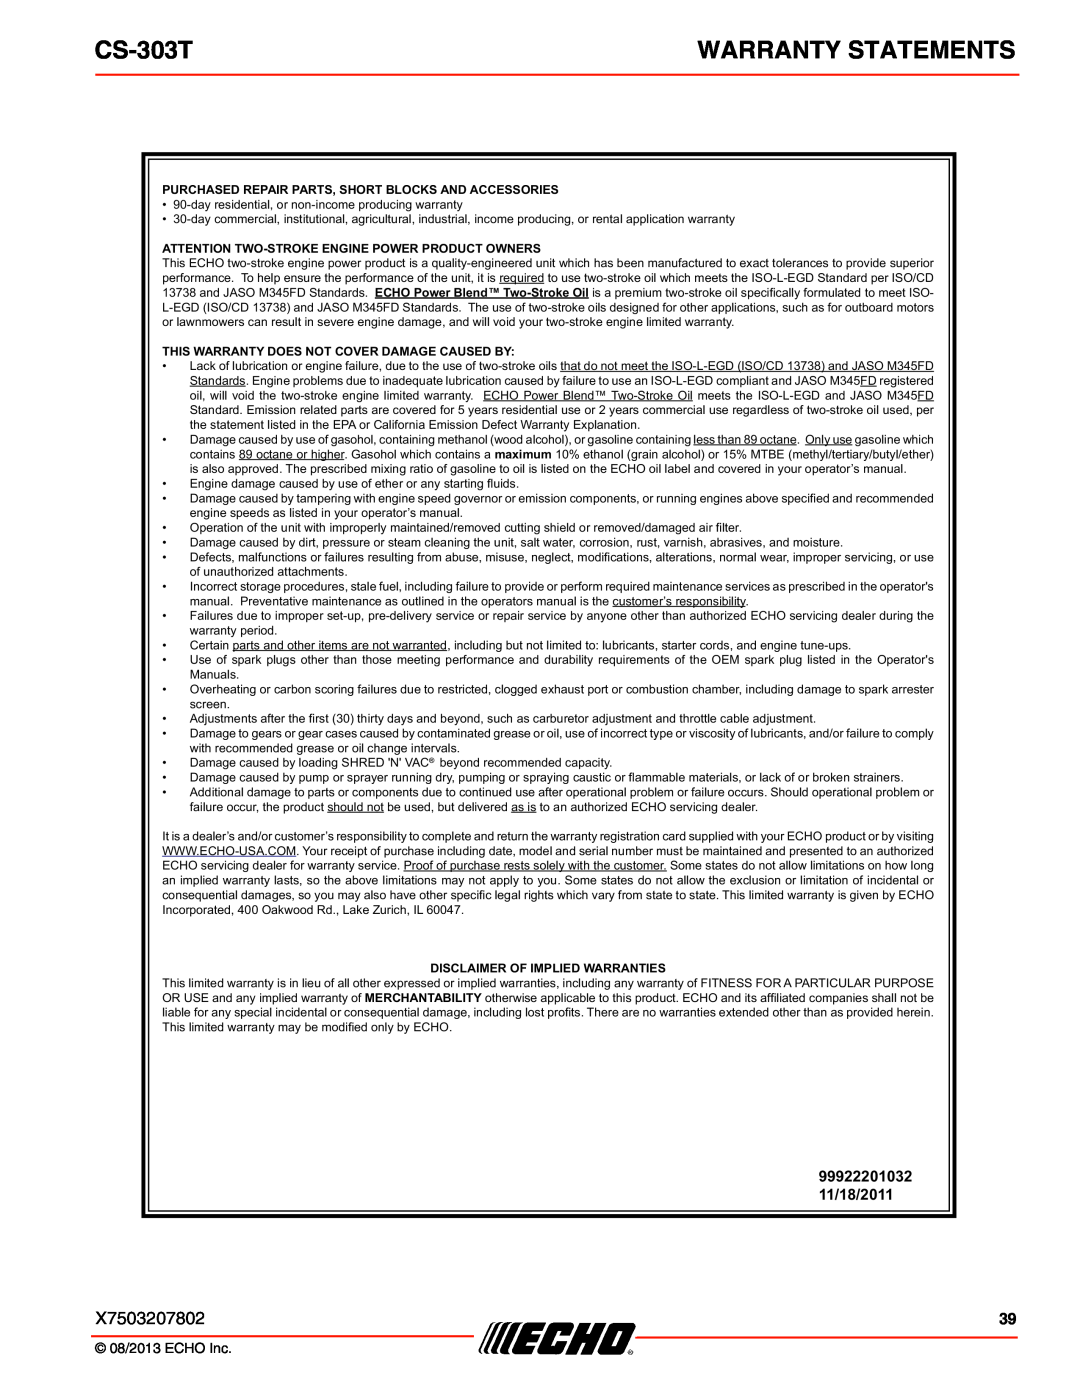 Echo CS-303T instruction manual Warranty Statements, 99922201032 11/18/2011, 08/2013 ECHO Inc 